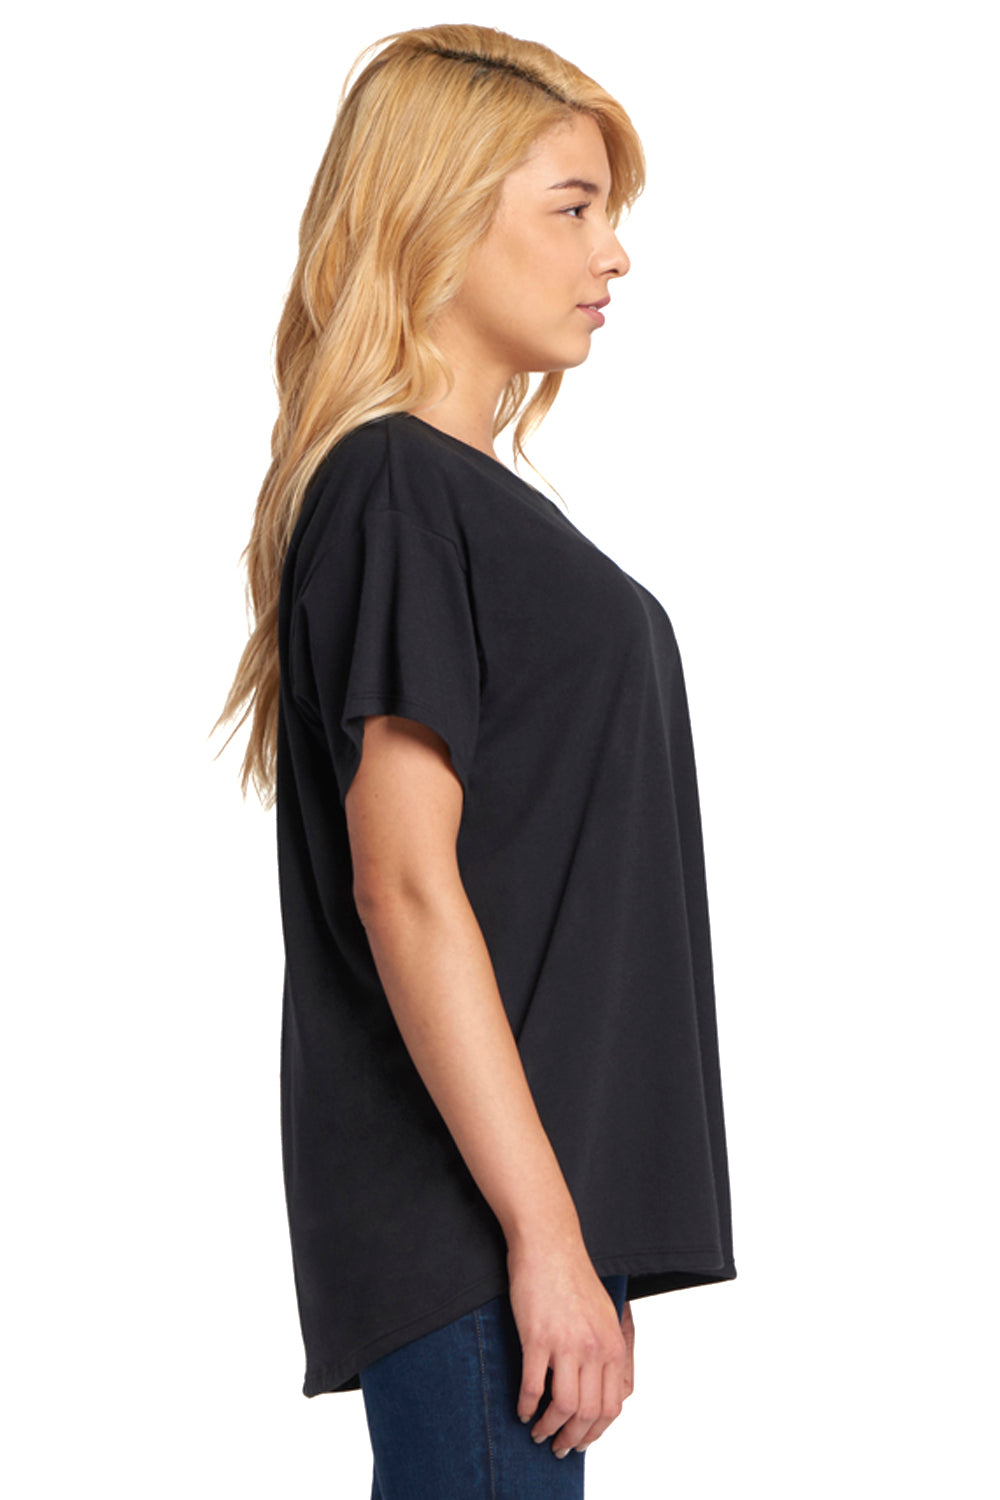 Next Level N1530 Womens Ideal Flow Short Sleeve Crewneck T-Shirt Black Side